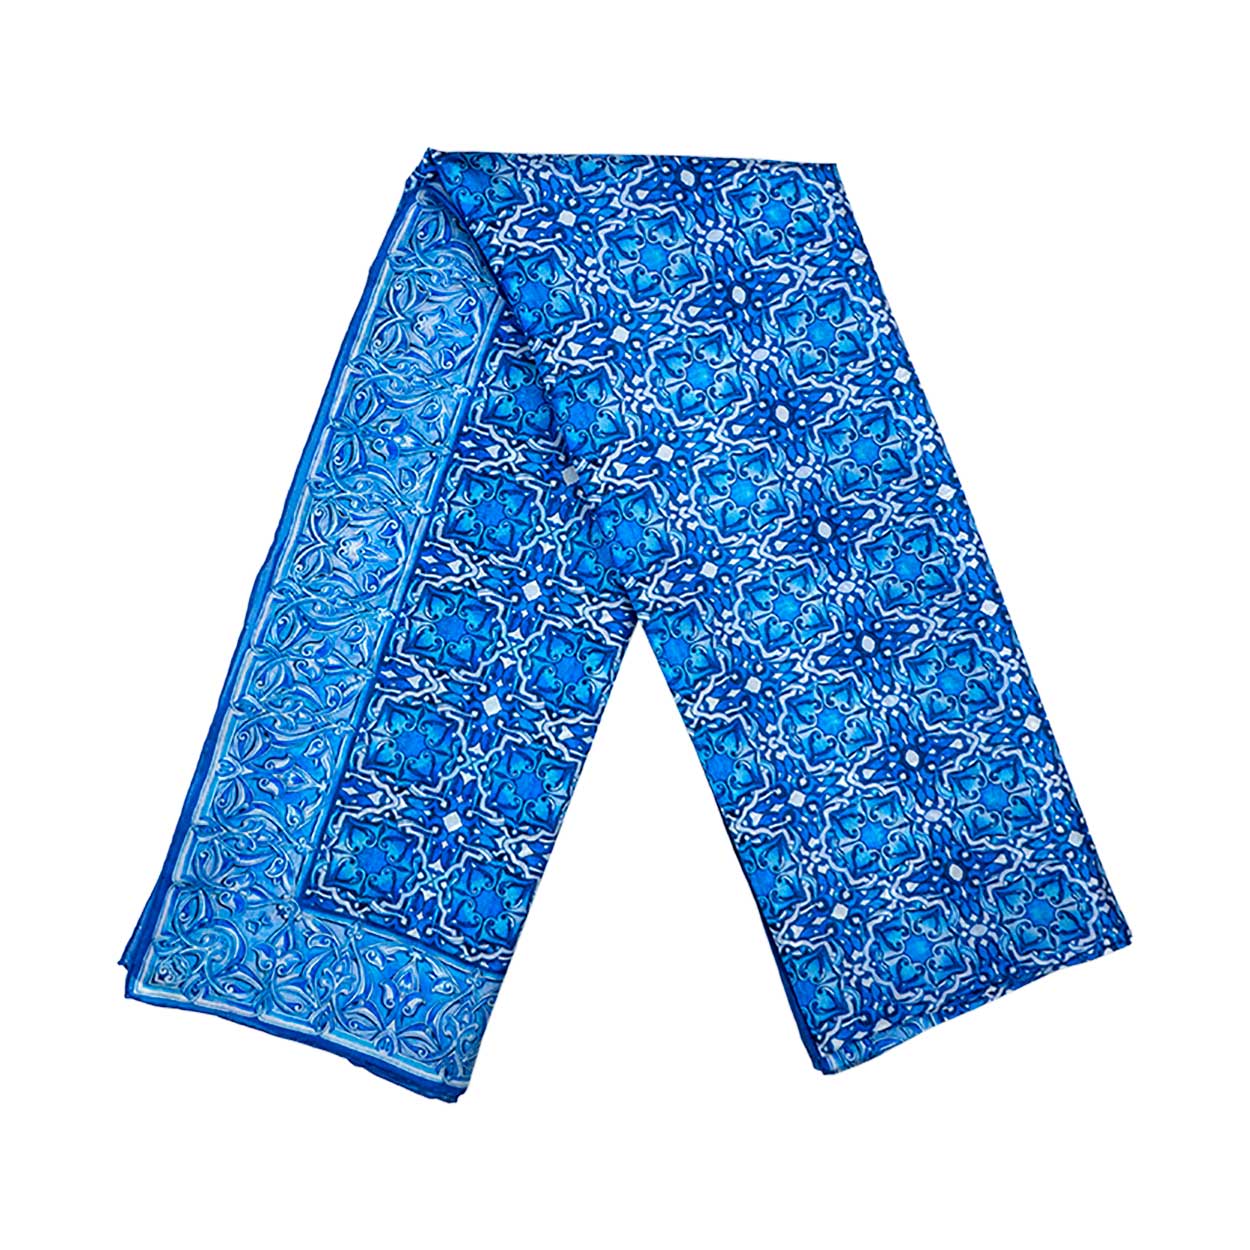 Blue silk scarf with islamic art print